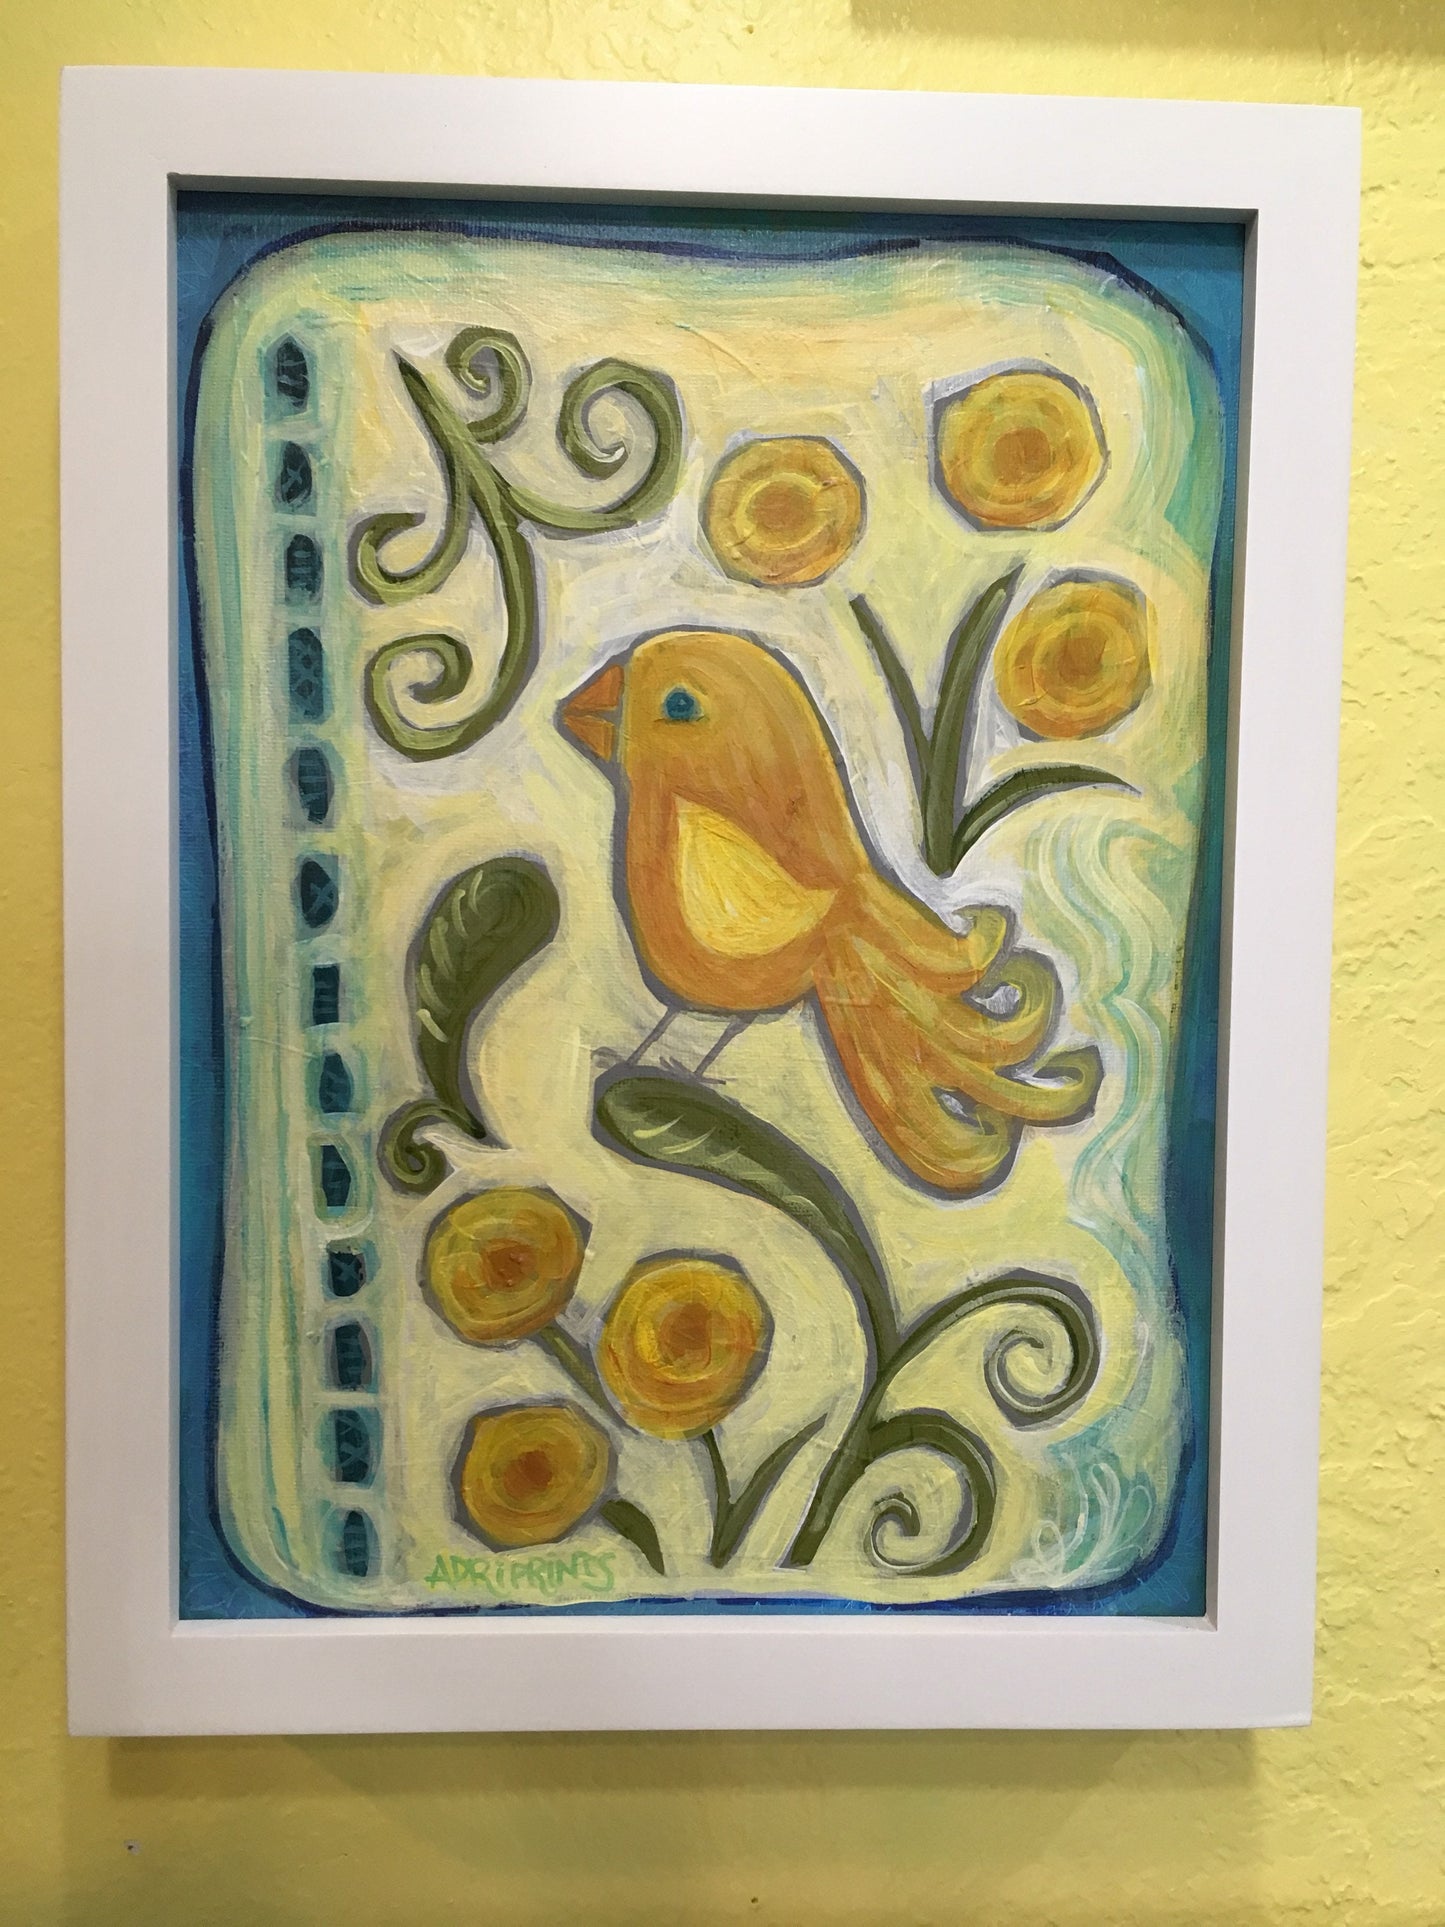 PAINTING- Yellow Bird Acrylic Painting, 9" x 12", acrylic on canvas board, by Adriana Bergstrom